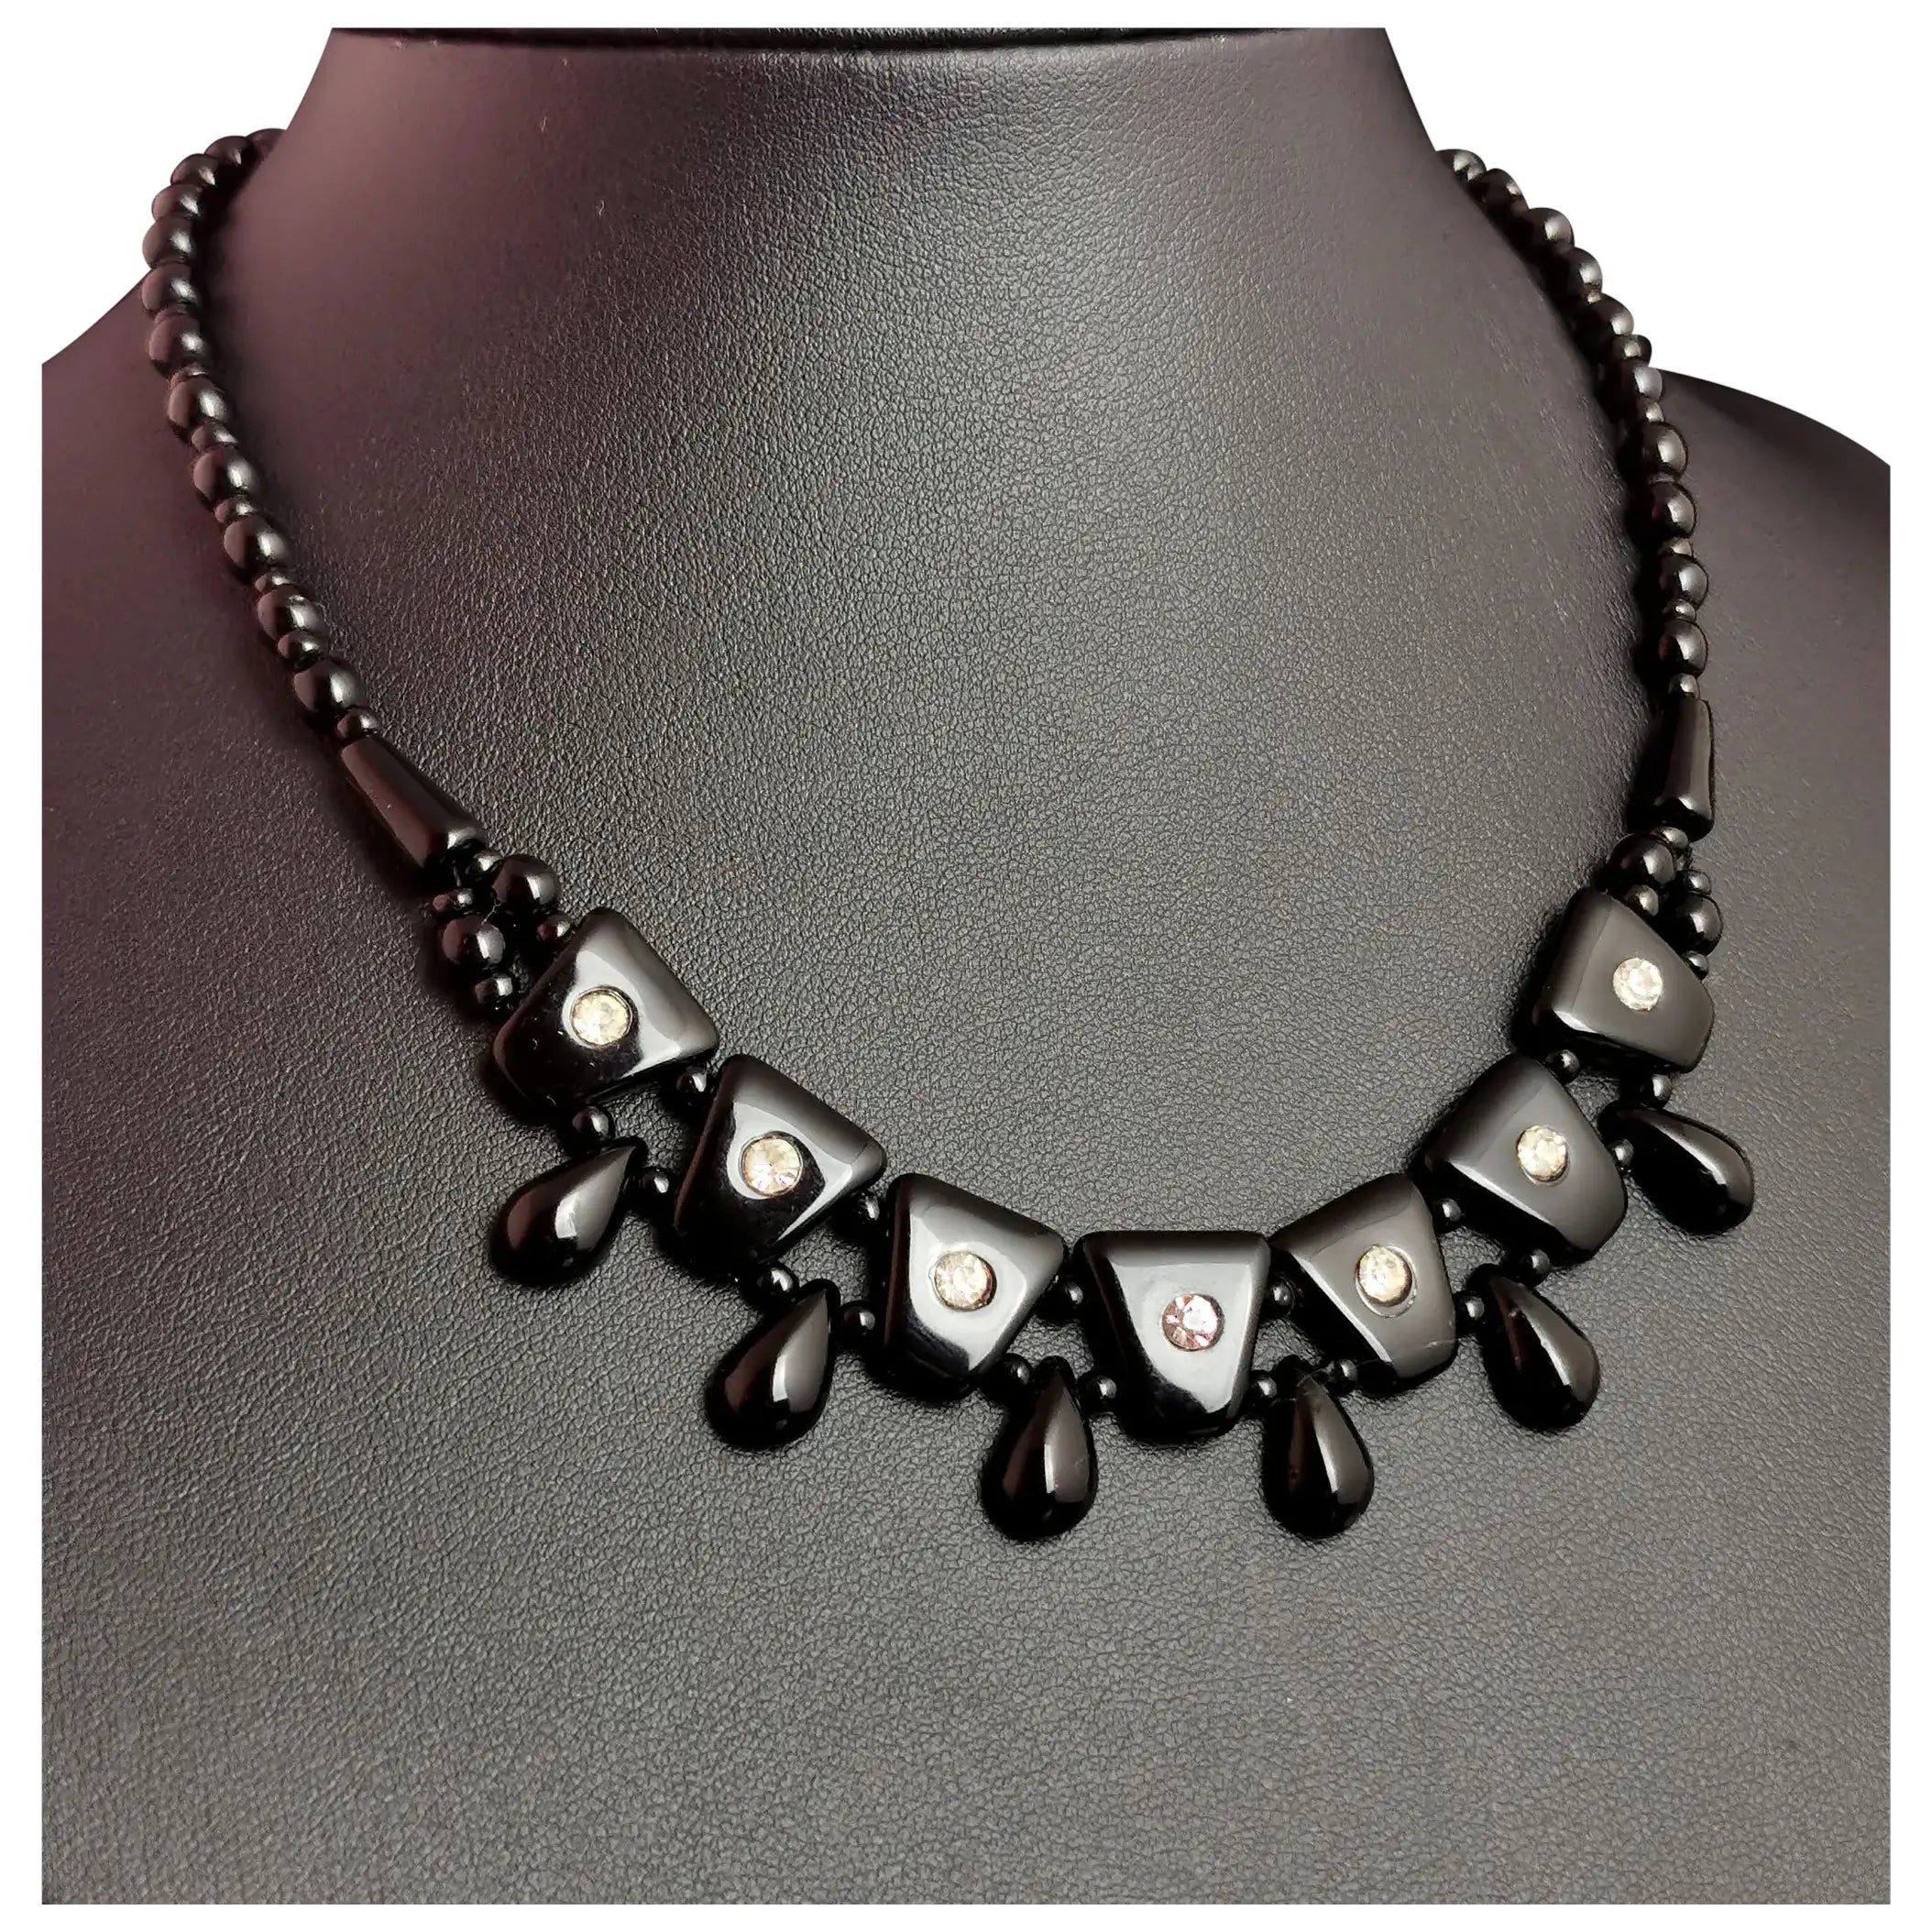 Vintage Costume Jewelry Black Jet Necklace | eBay